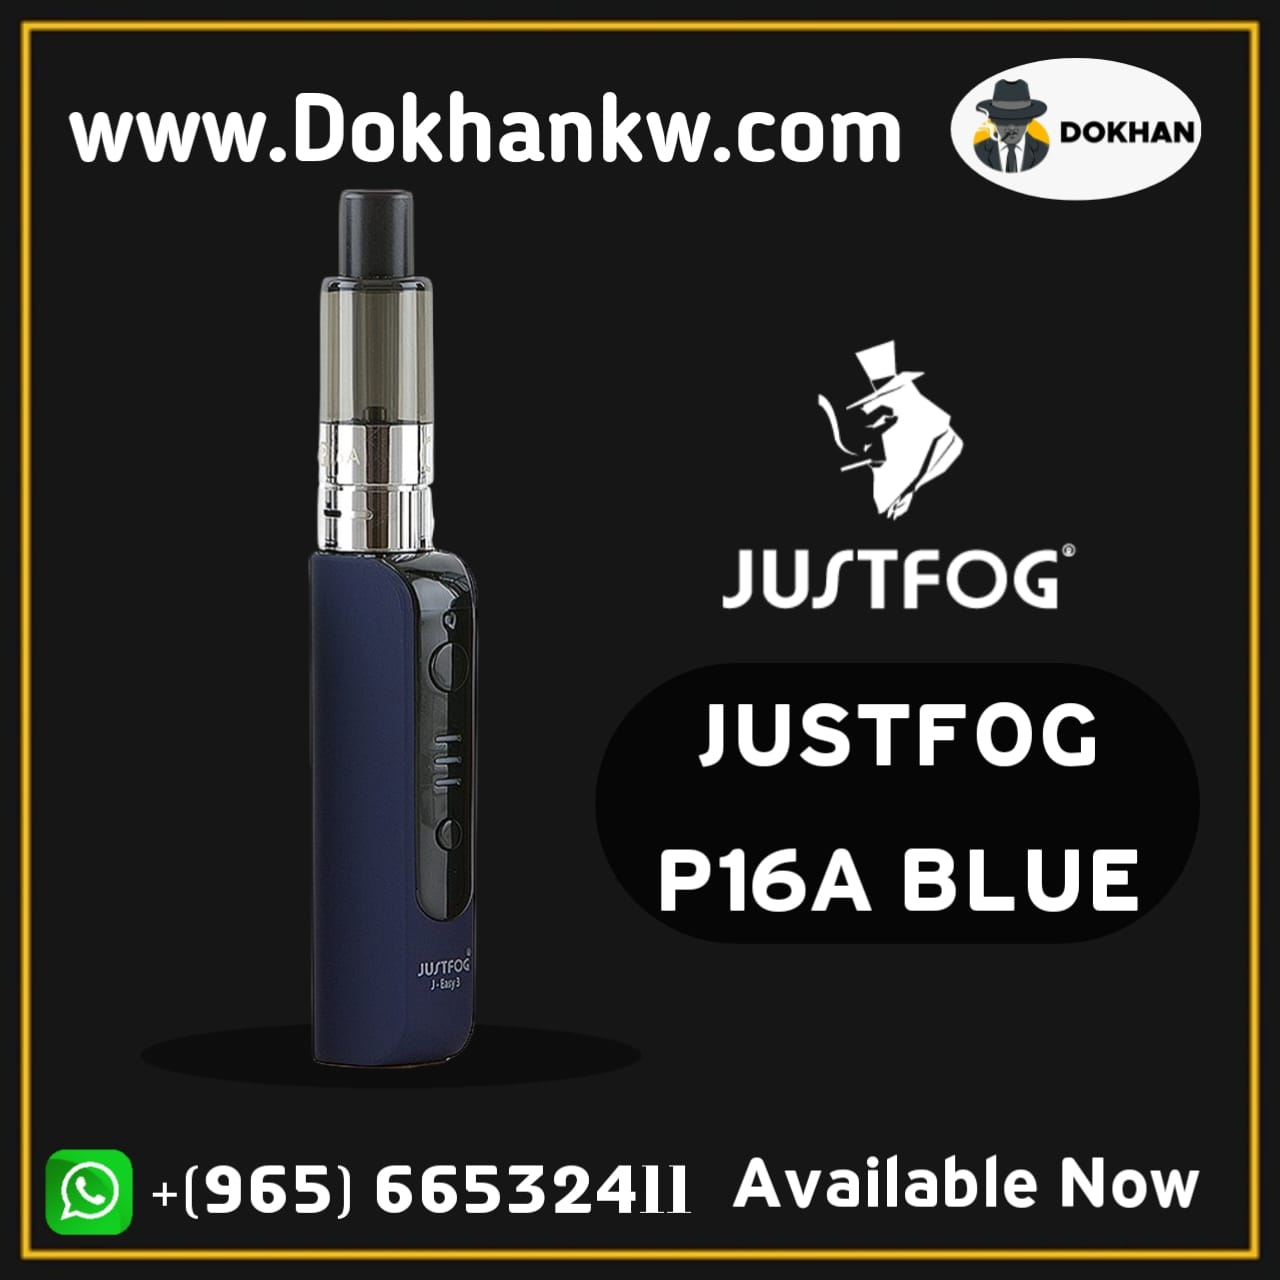 JUSTFOG P16A BLUE